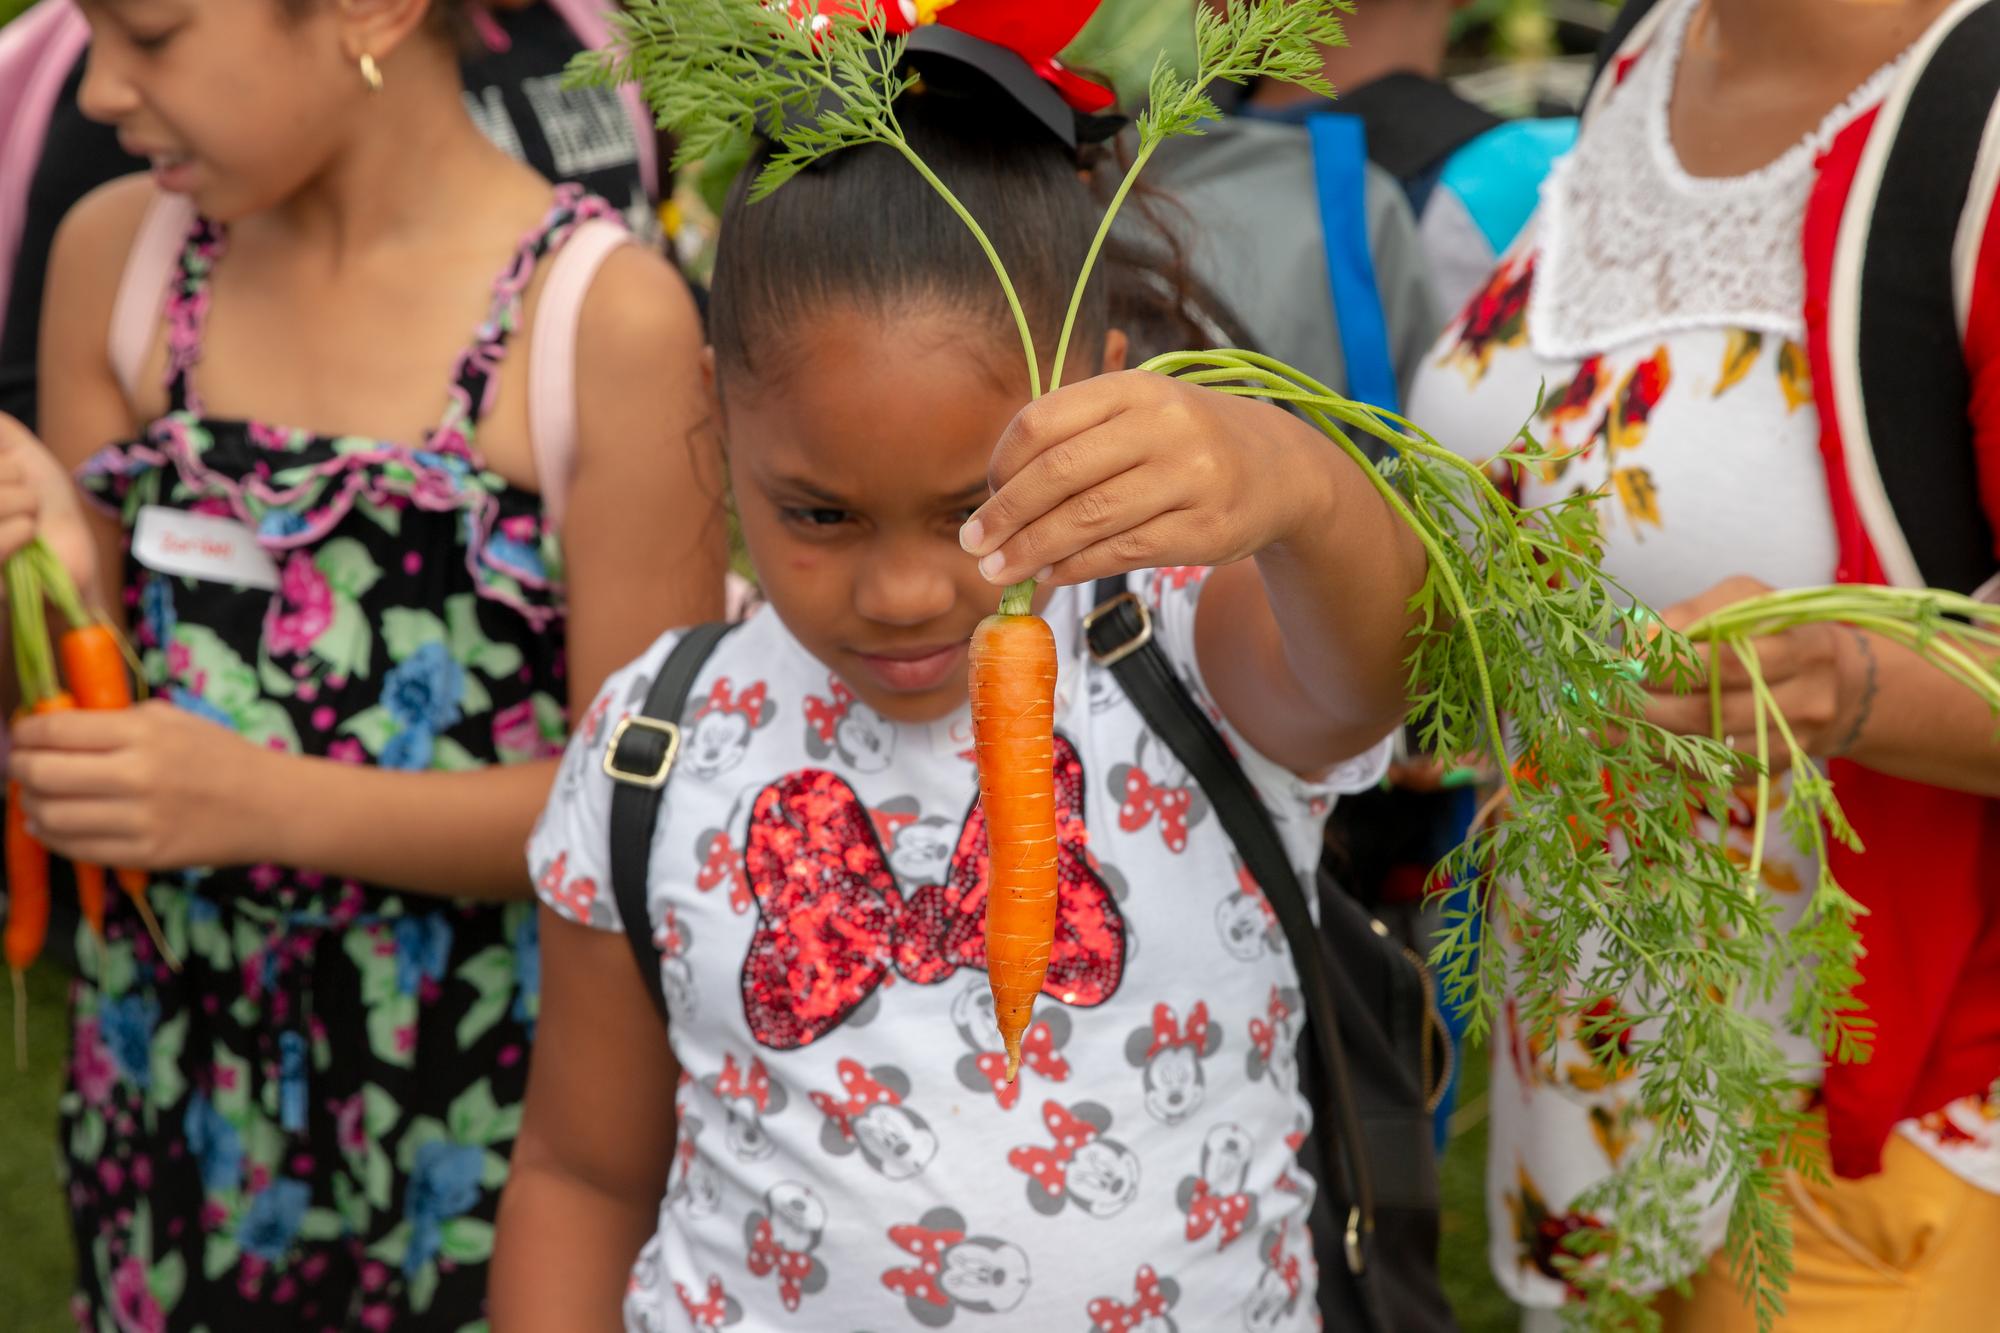 Girl holding a carrot